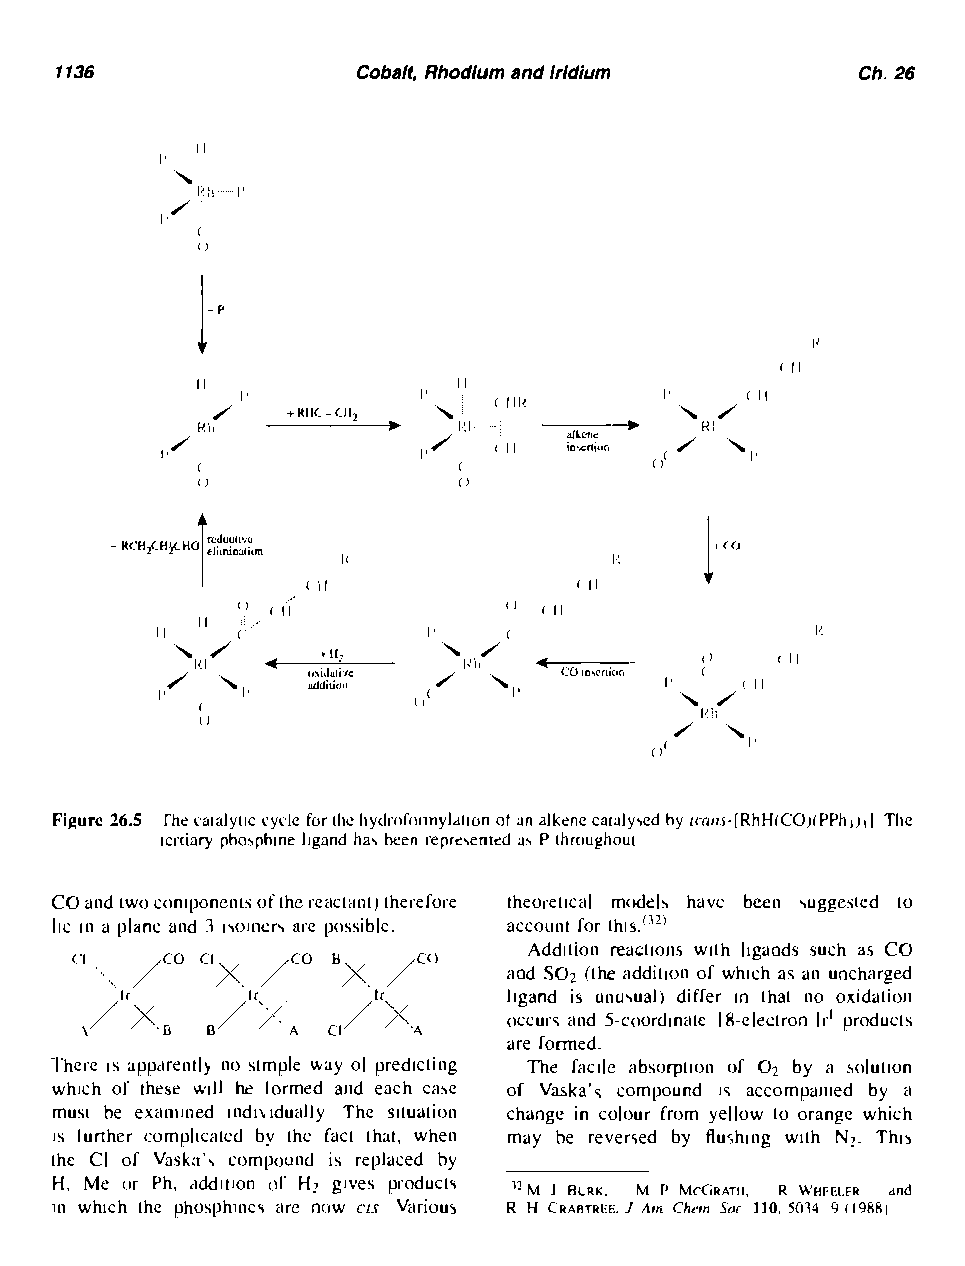 Figure 26.5 The laialyiic tyilc for ilic hydnifniinylaiion of an alkenc caralyicd hy TiJH-[RhHlCOjlPPh)j J The ici ciary phosphine ligand has been lepfcsemcd as P ihmughoui...